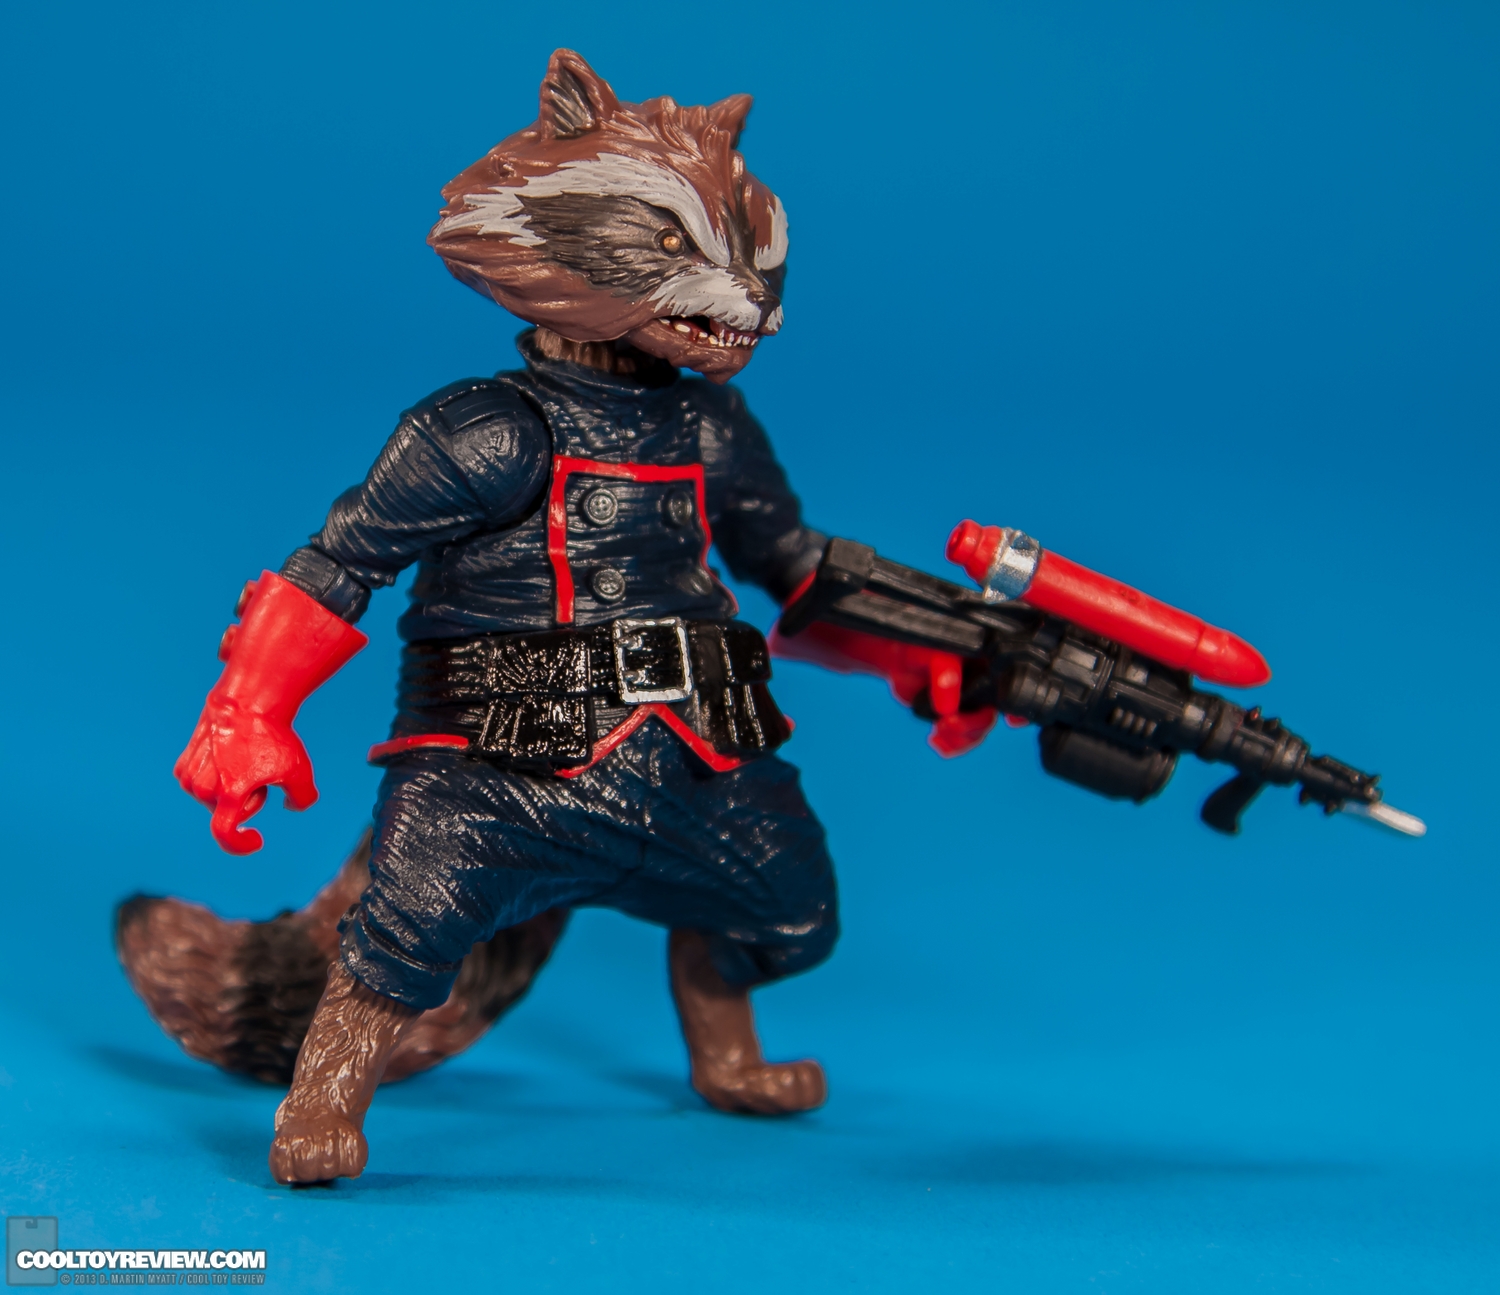 Marvel-Legends-Rocket-Raccoon-Series-Build-A-Figure-Hasbro-002.jpg